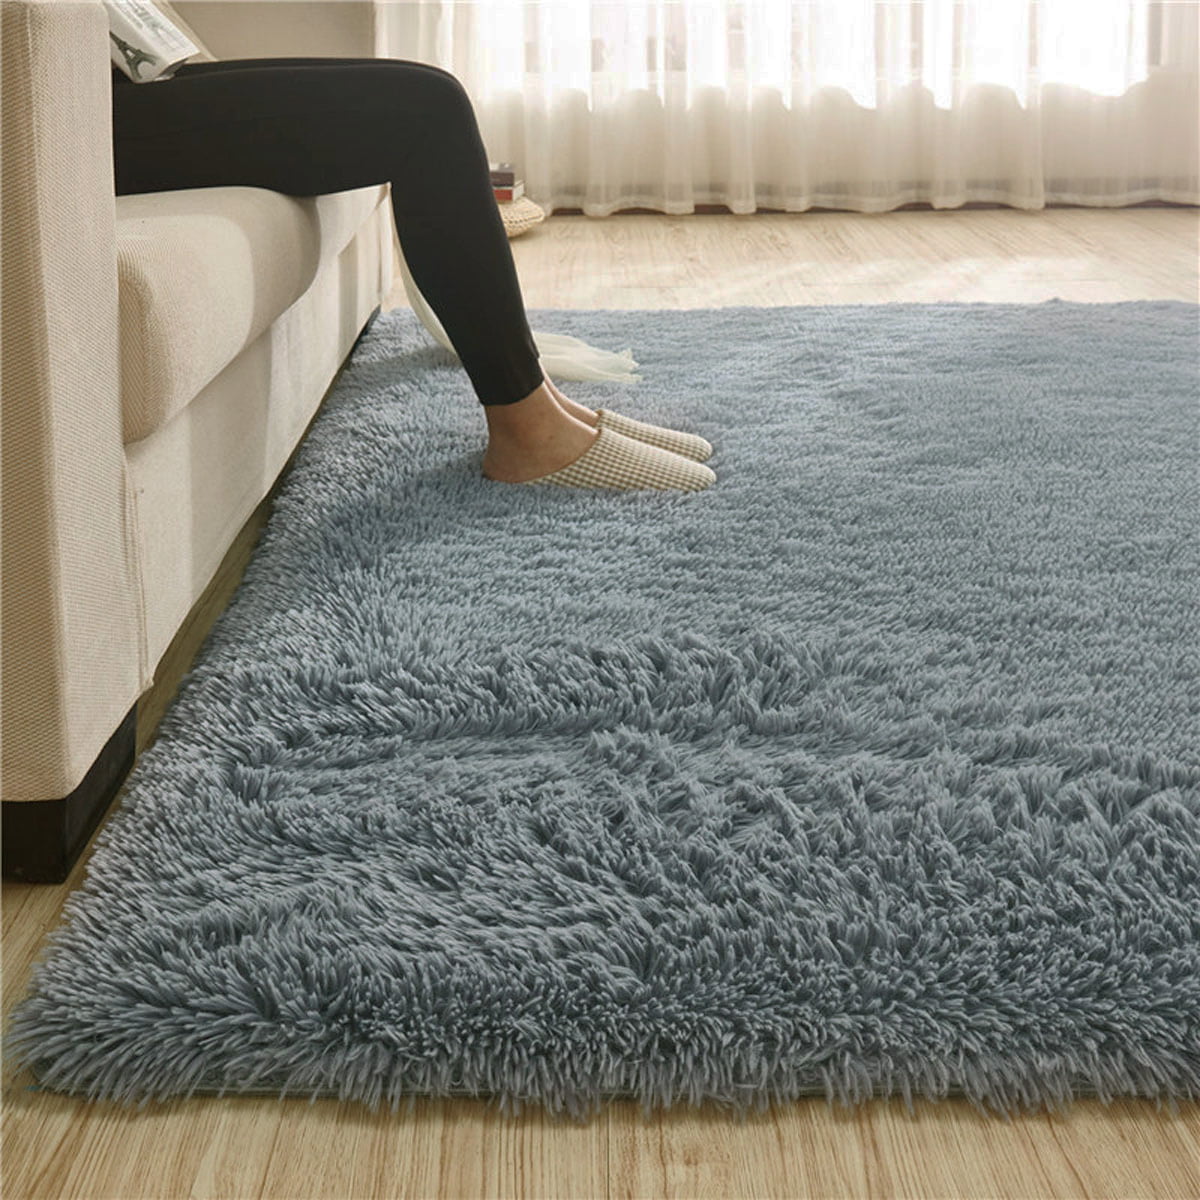 Living Room Carpet Kid Room Play Area Rug Safe Soft Fluffy Home Decor Mat Floor 